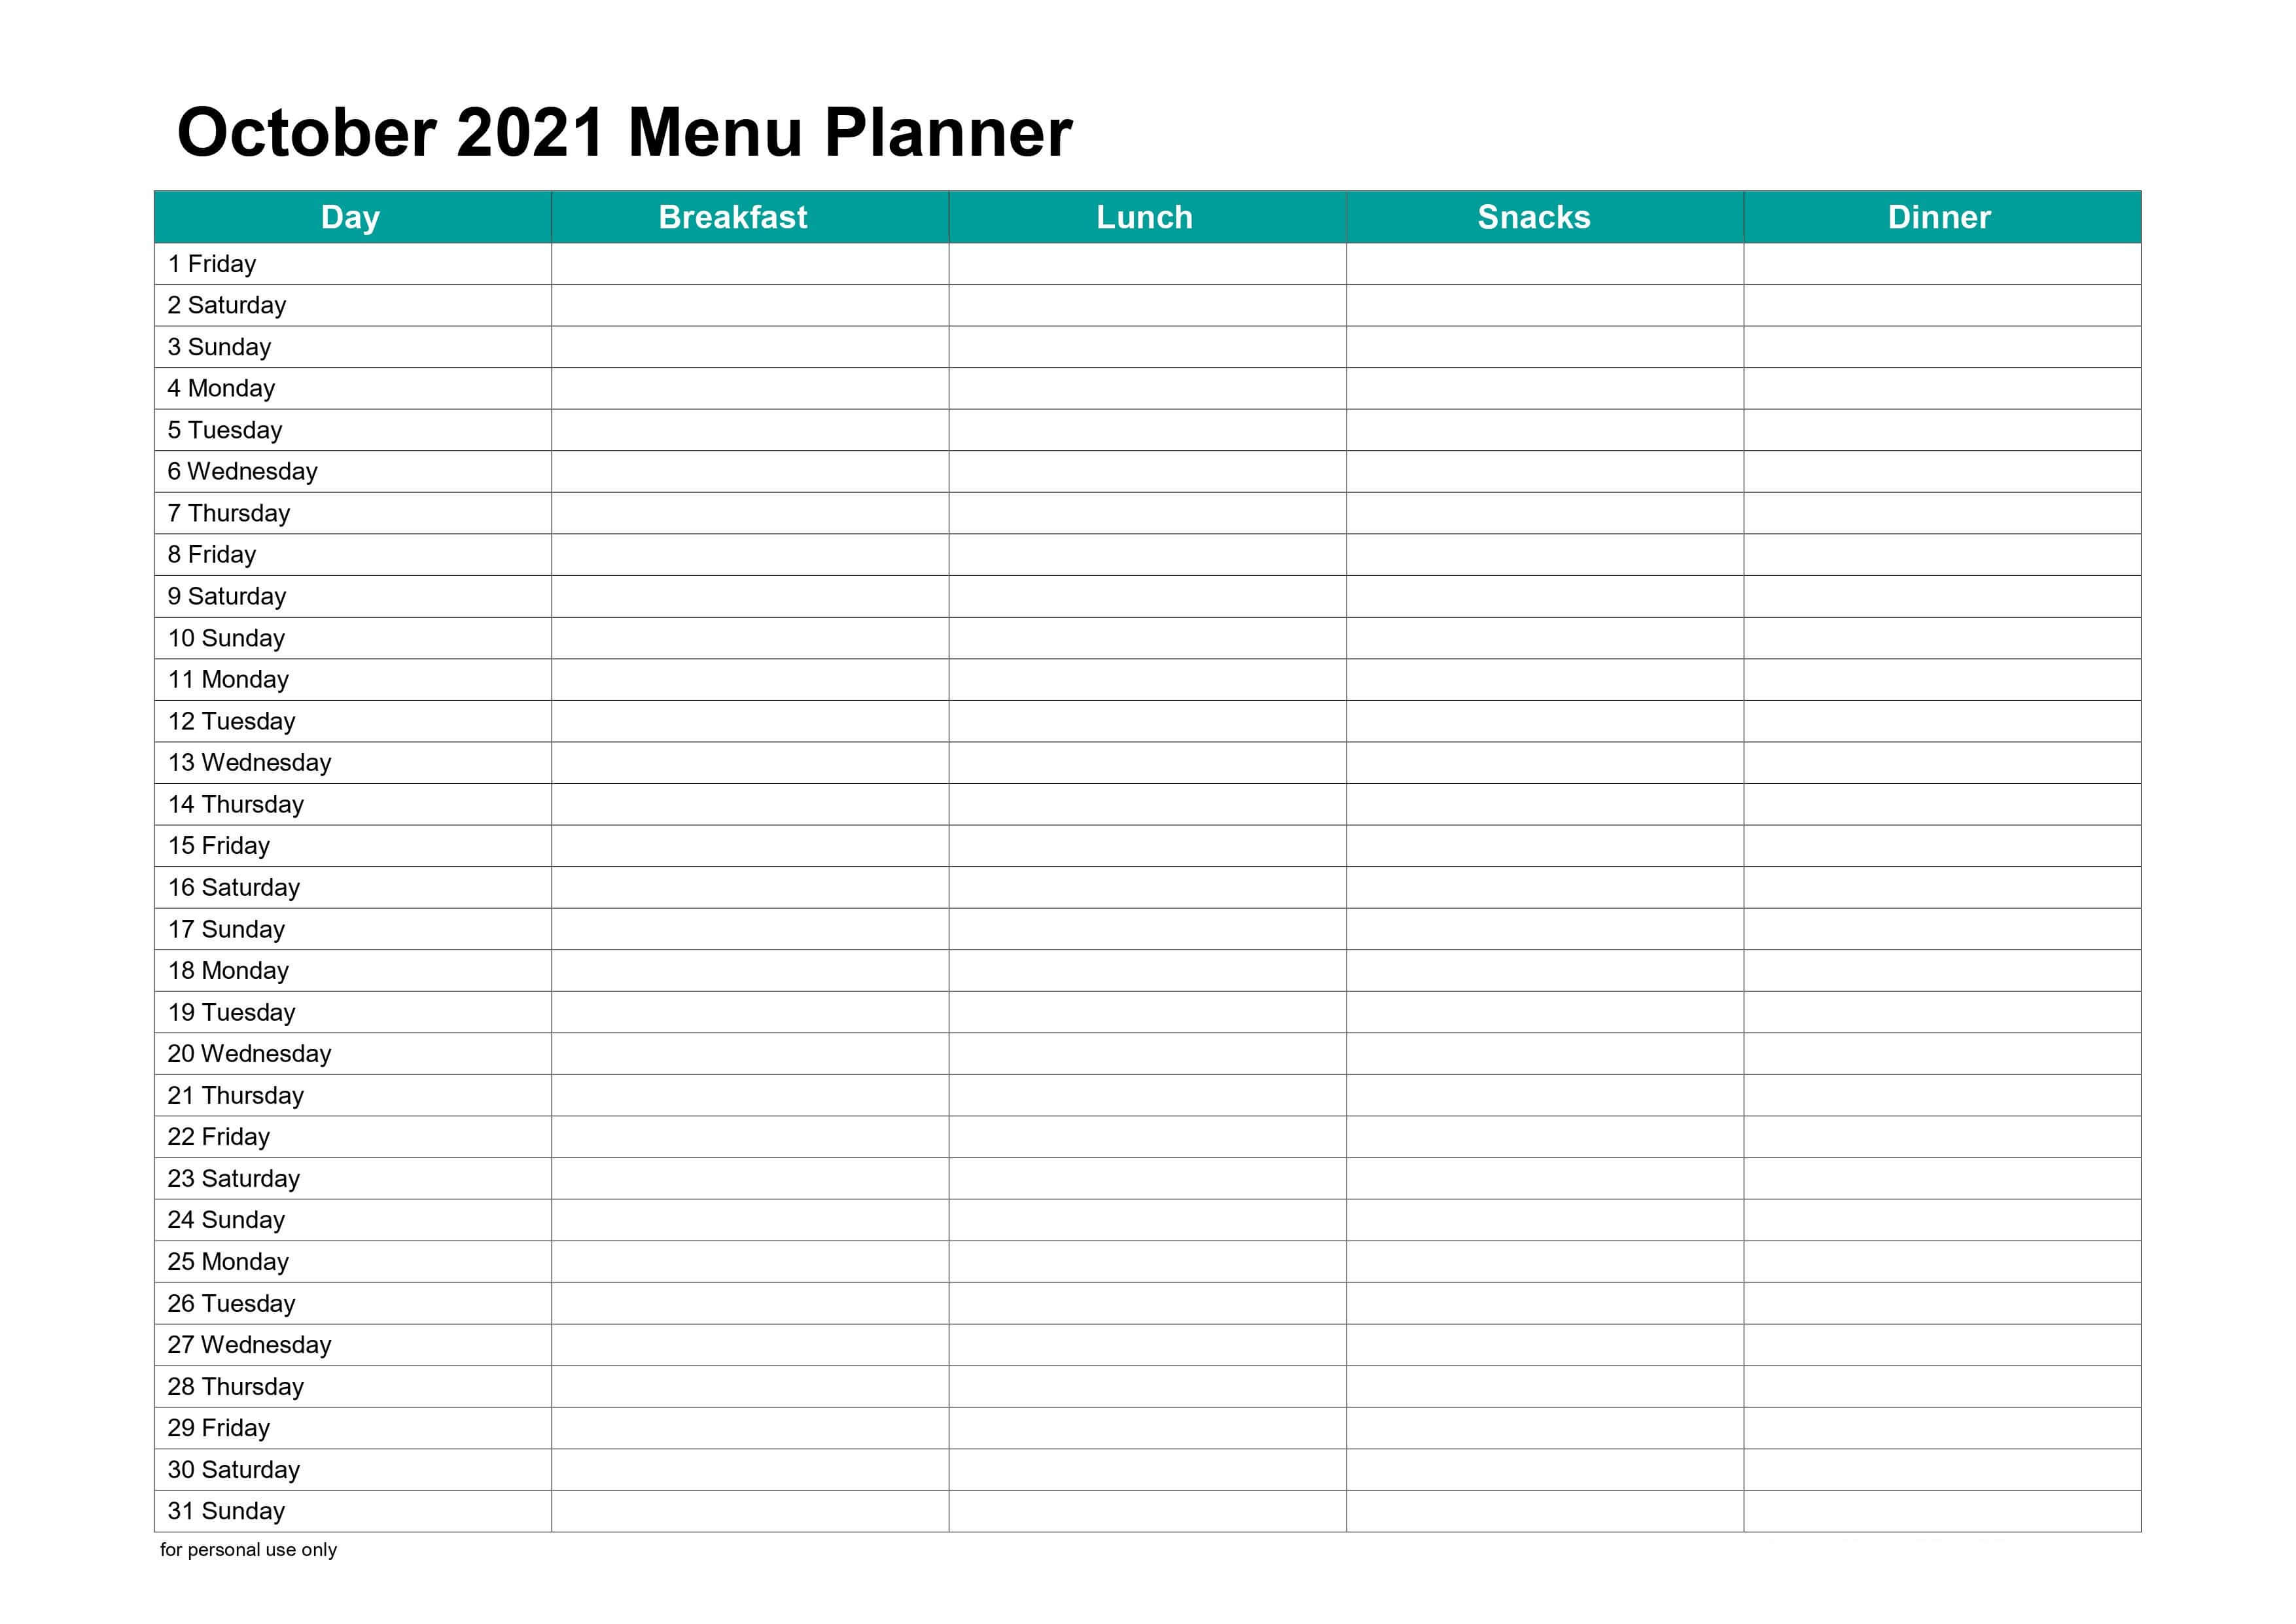 October 2021 Menu Planner